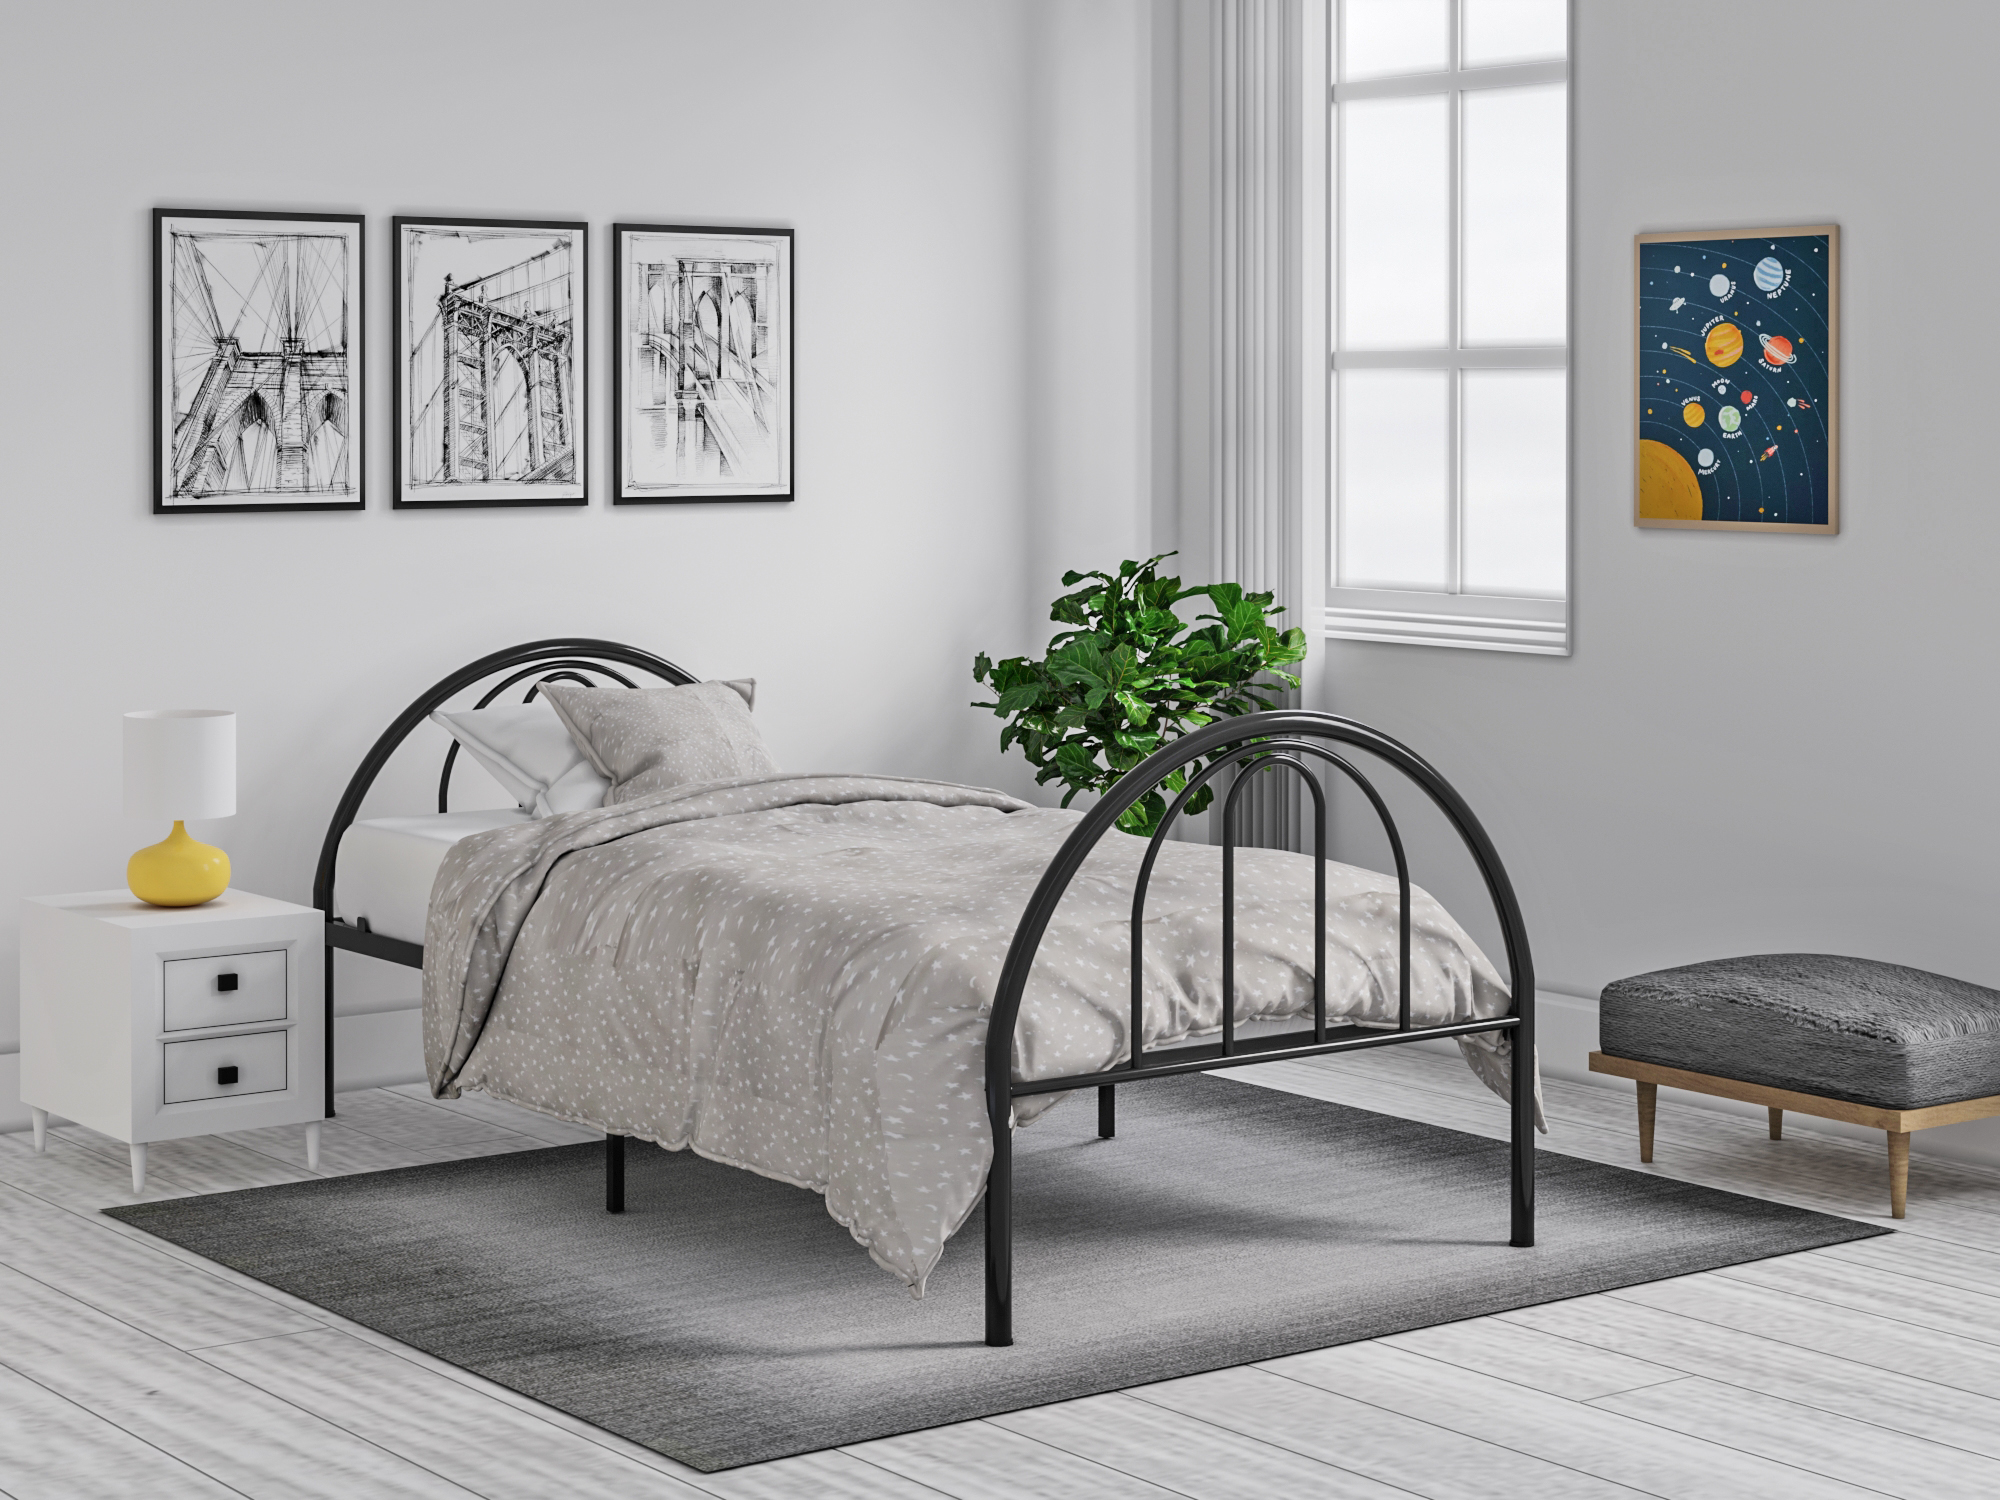 BK Furniture Brooklyn Classic Metal Bed, Twin, Black - image 1 of 4